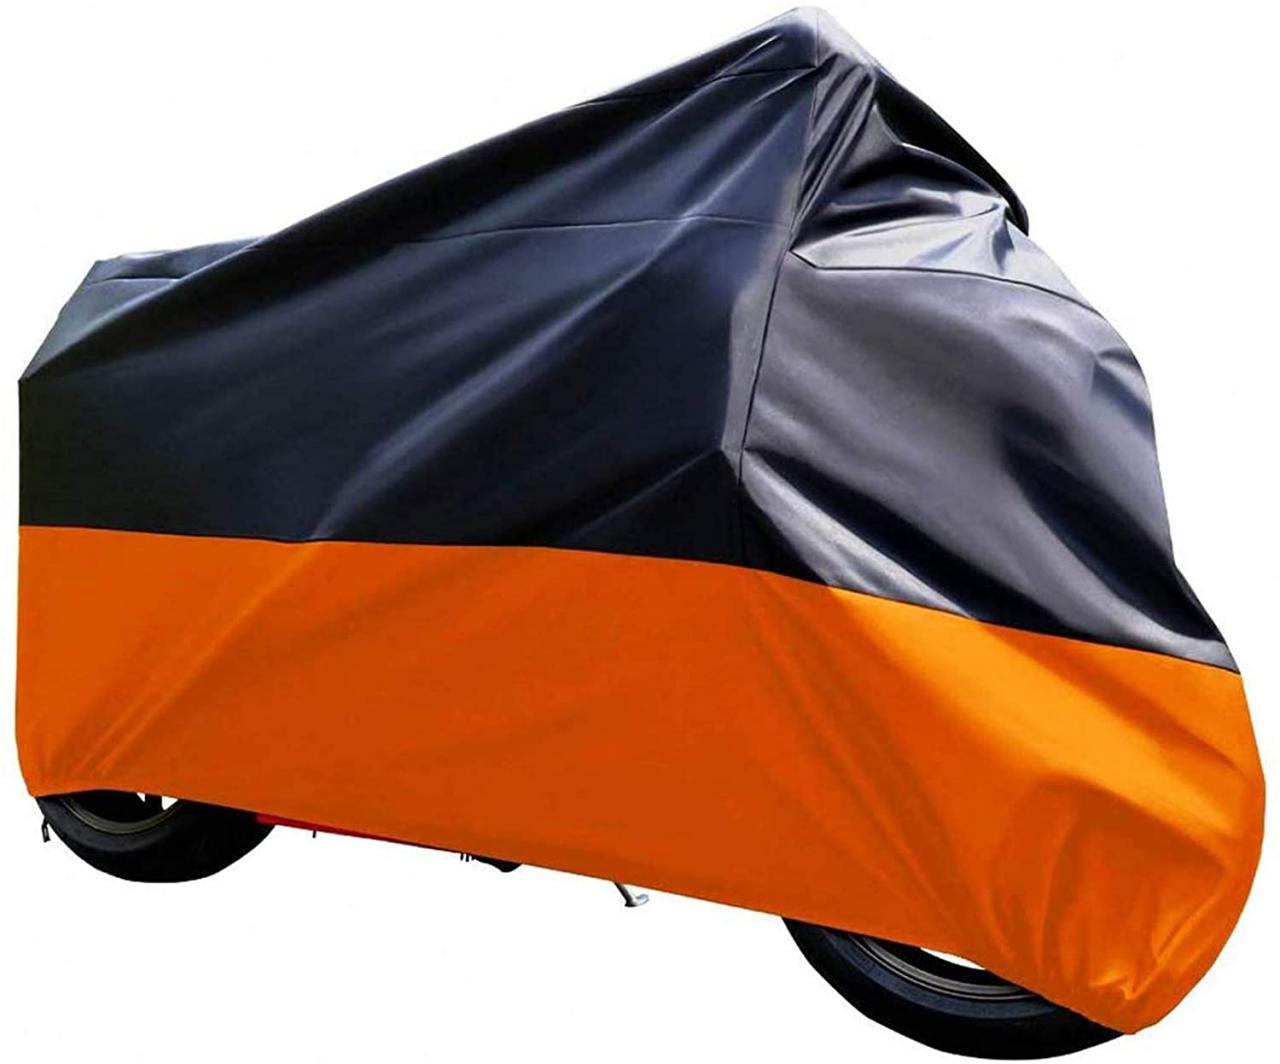 Tokept Black and Orange Waterproof Sun Motorcycle c